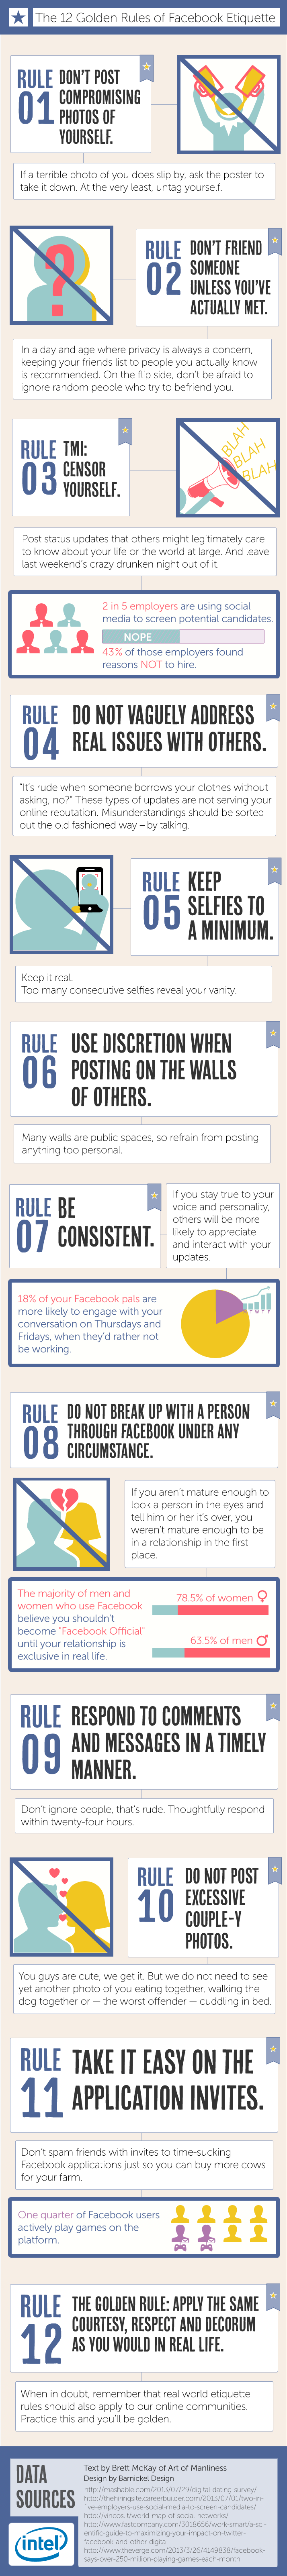 12-golden-rules-of-facebook-etiquette